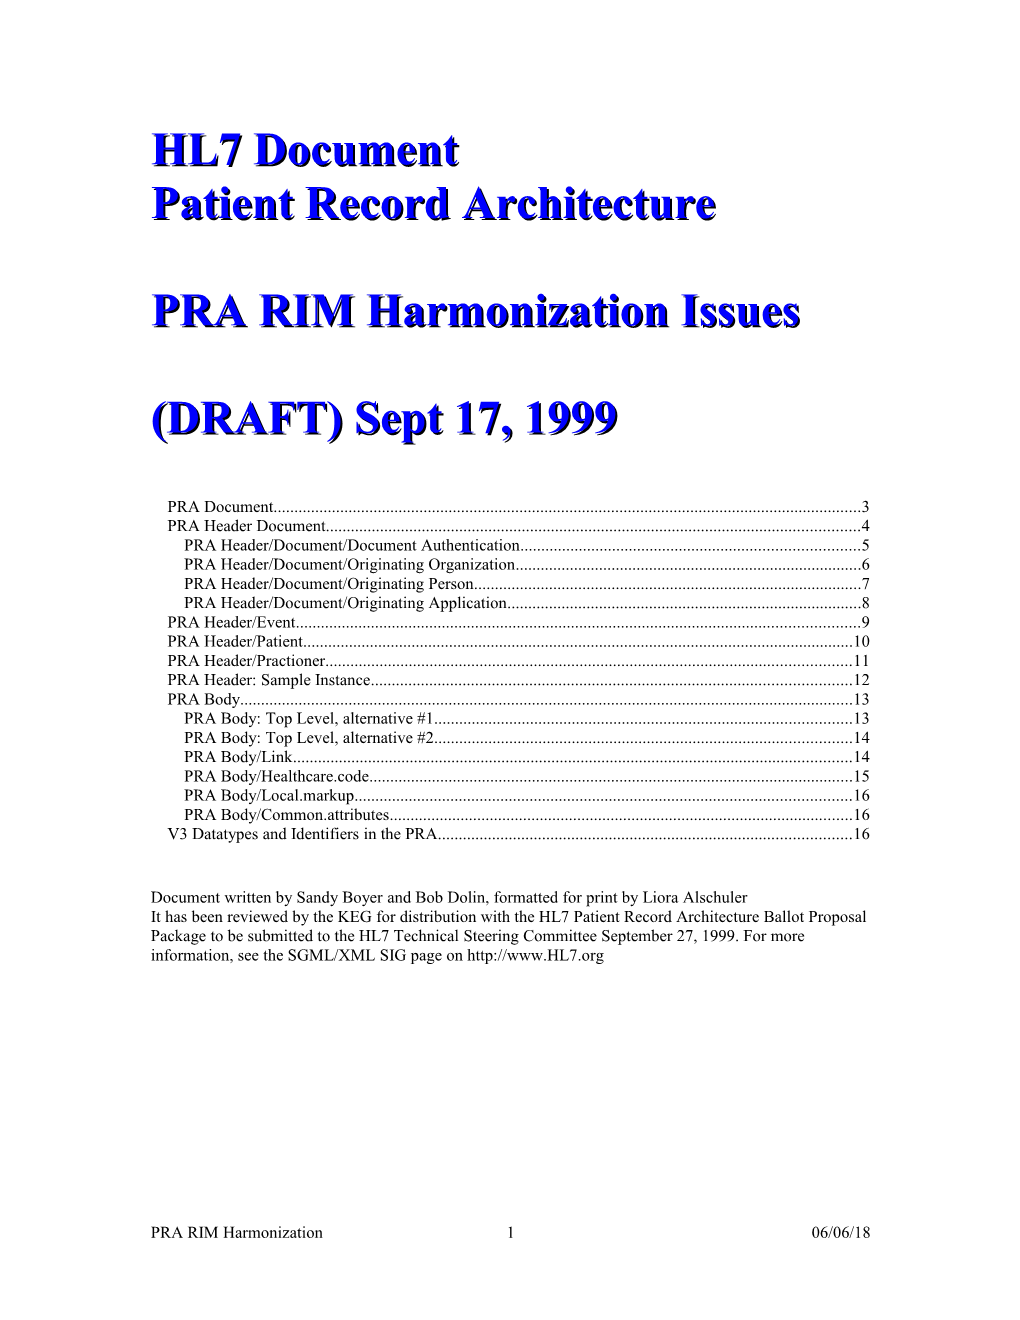 PRA RIM Harmonization Issues